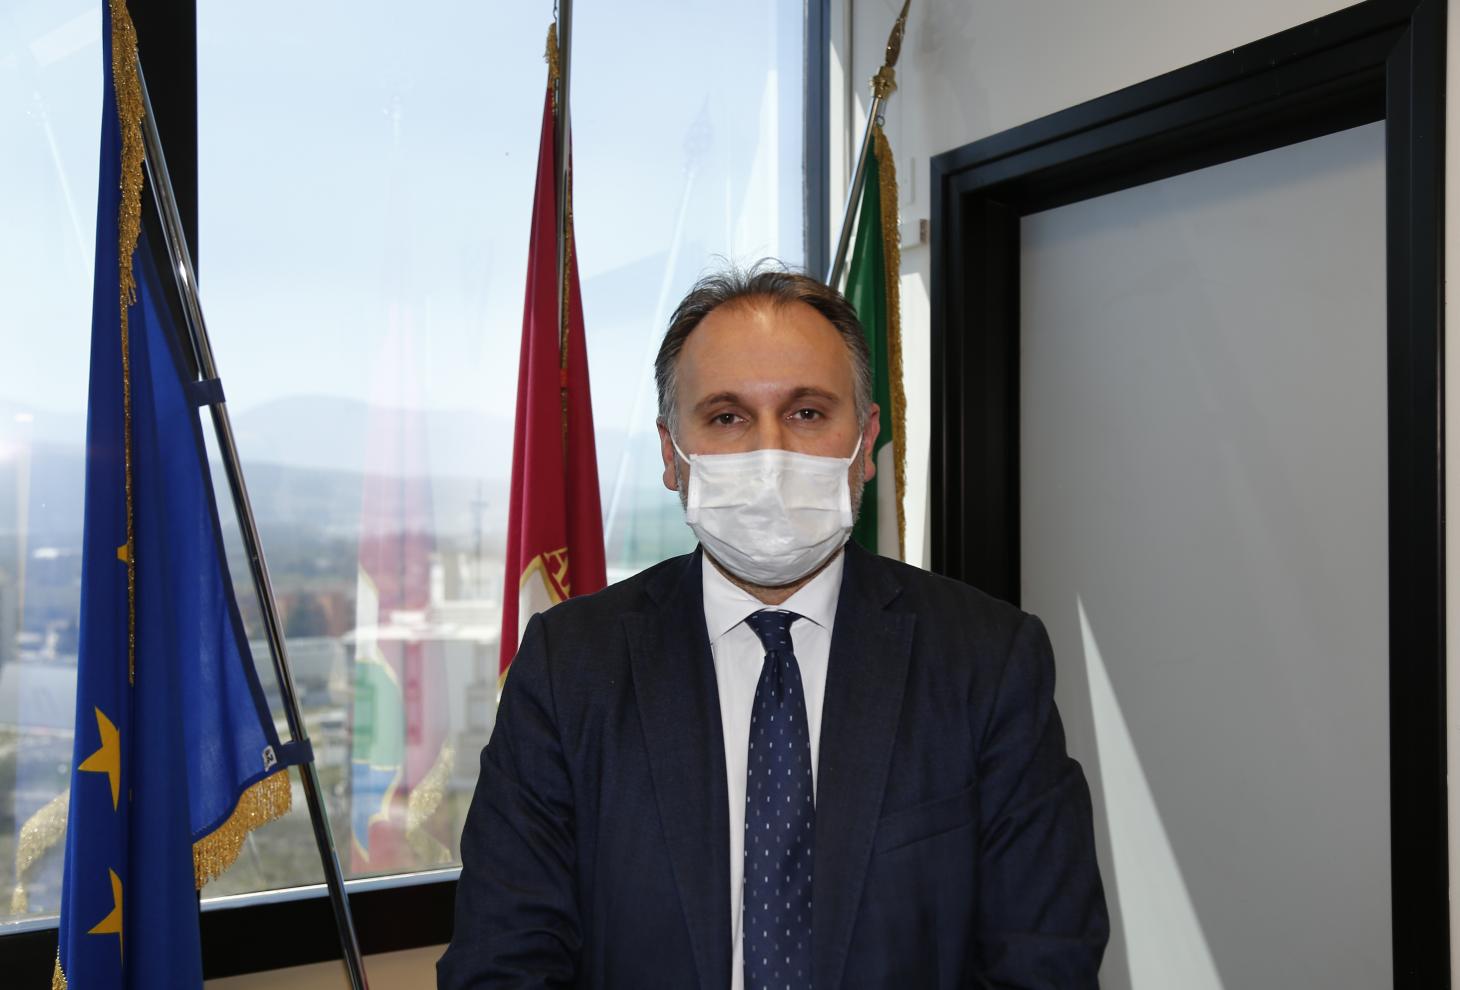 Assessore regionale Guido Quintino Liris